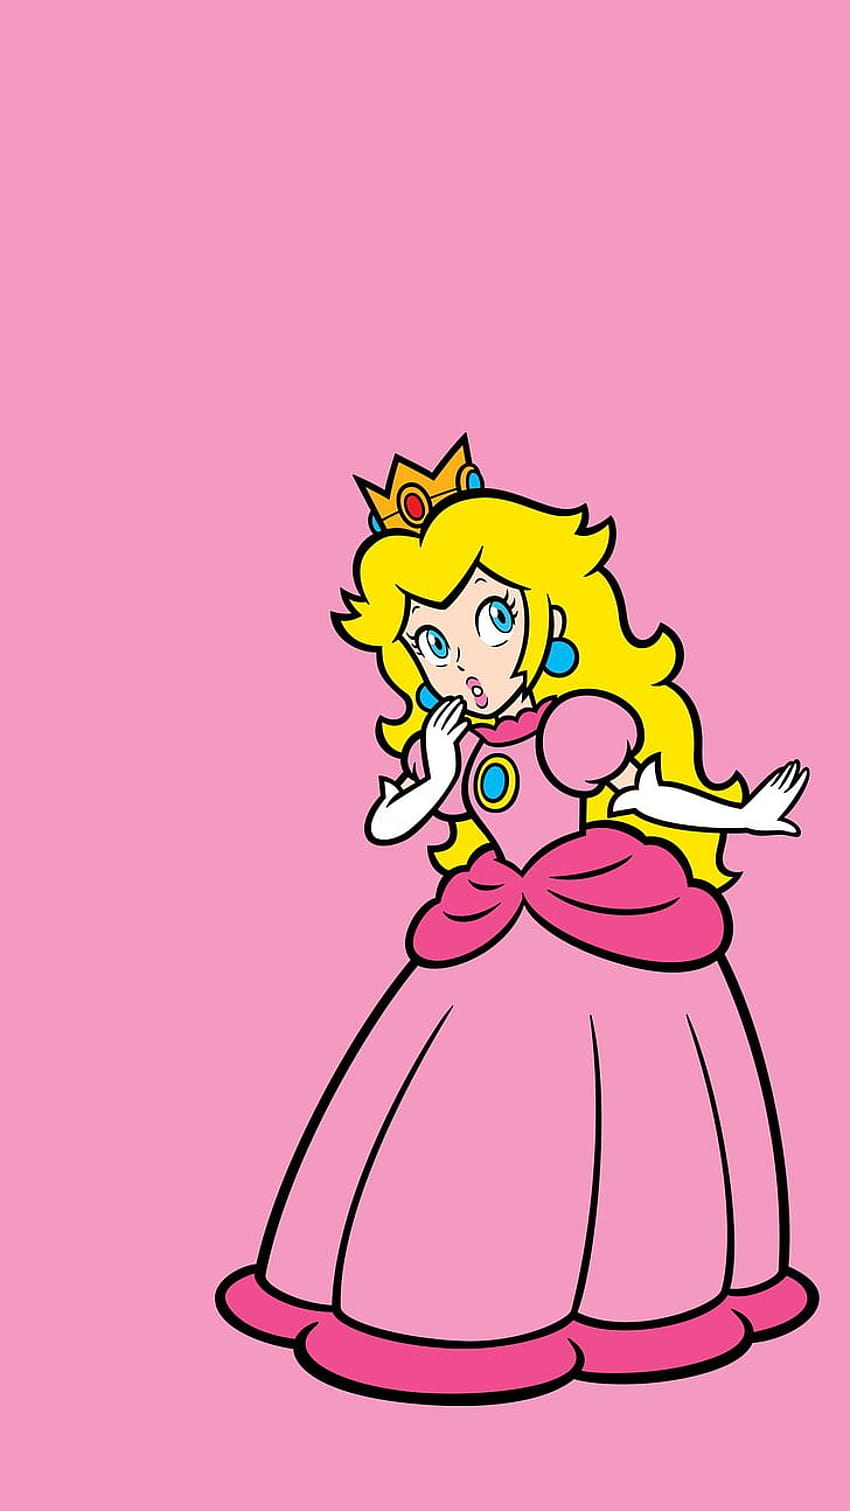 : videojuegos, Princesa Peach, Super Mario, Nintendo, princesa iphone fondo de pantalla del teléfono